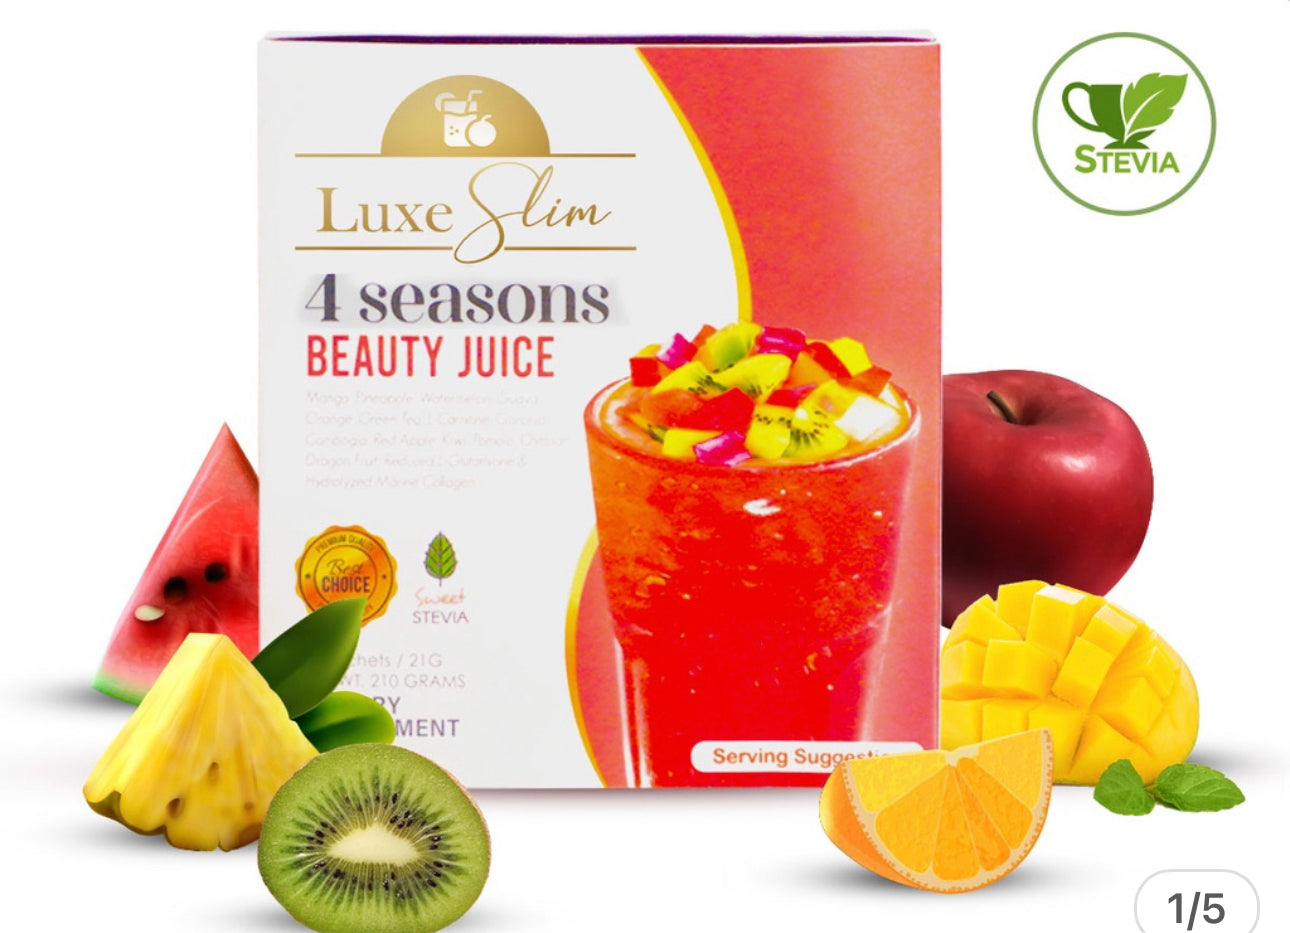 Luxe Slim Four Season Slimming Beauty Juice